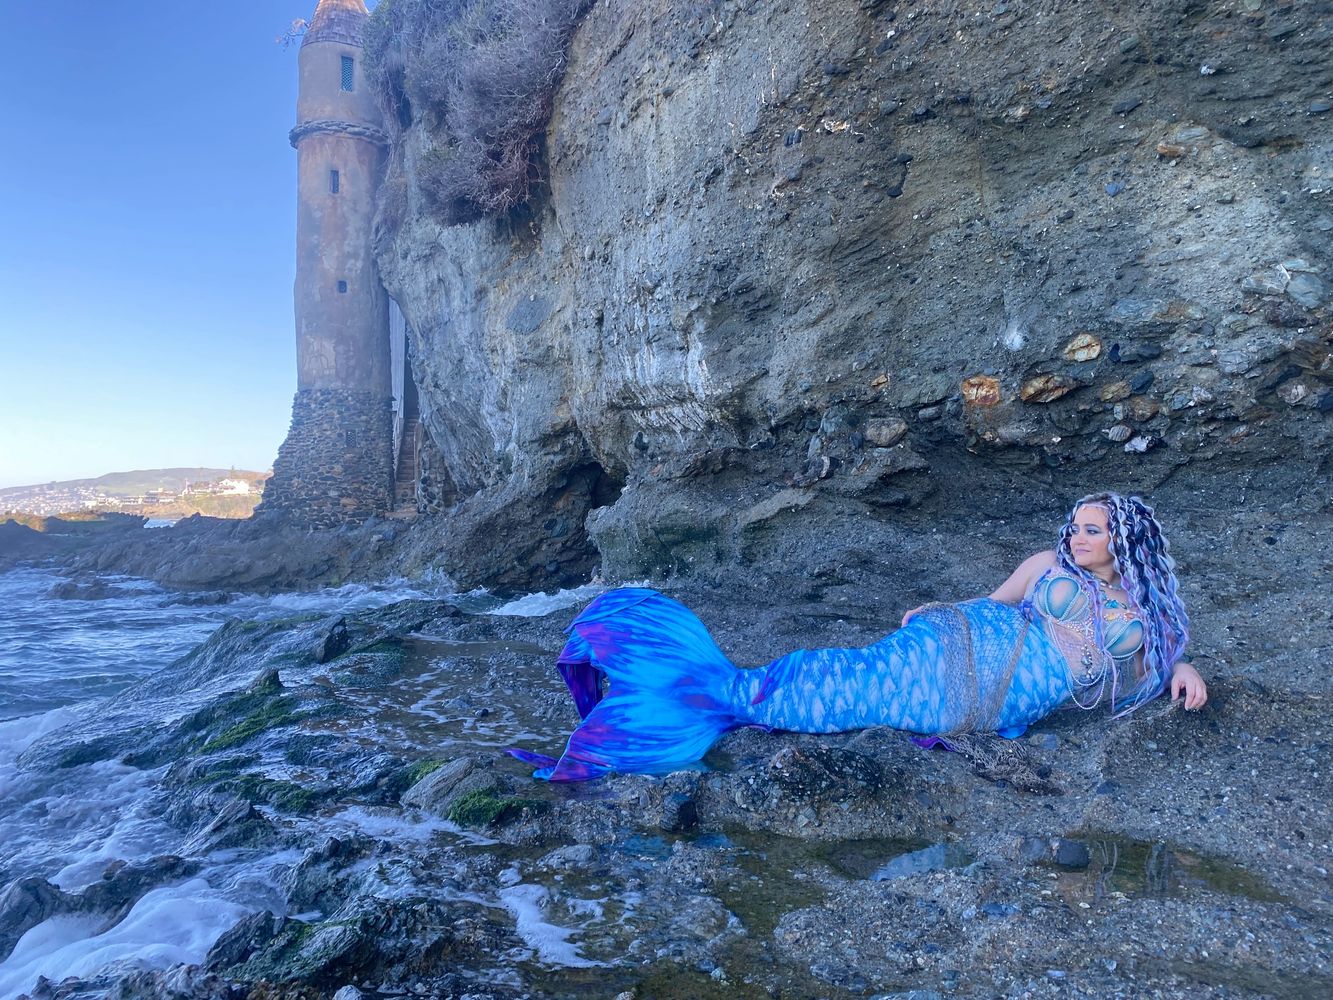 Mermaid Bree lounging on the rocks of Victoria Beach, CA